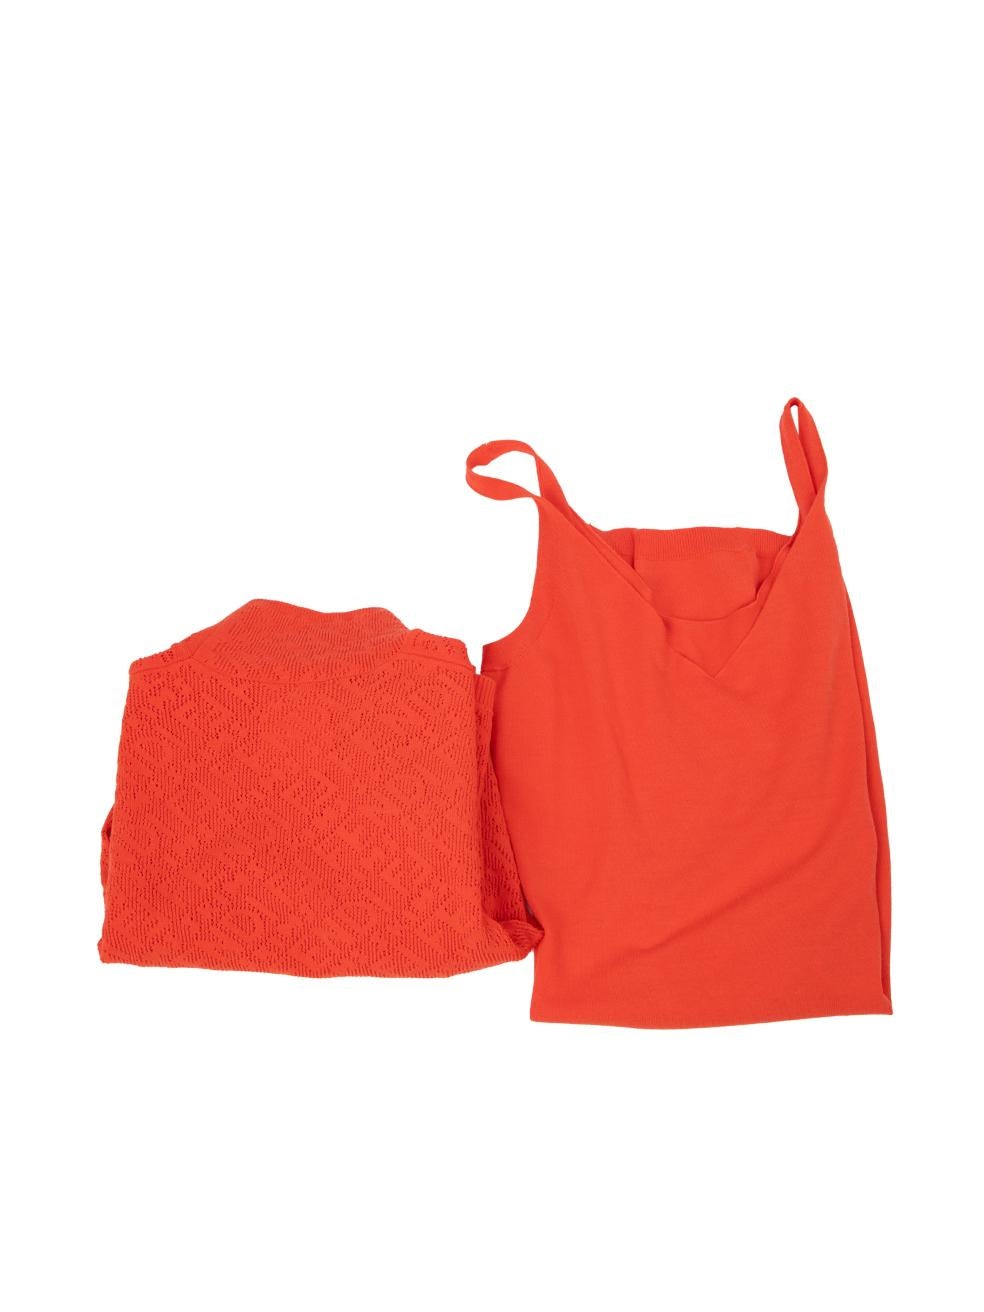 Fendi Fendi x Skims Red Mesh Logo Knit Dress Size M For Sale 1